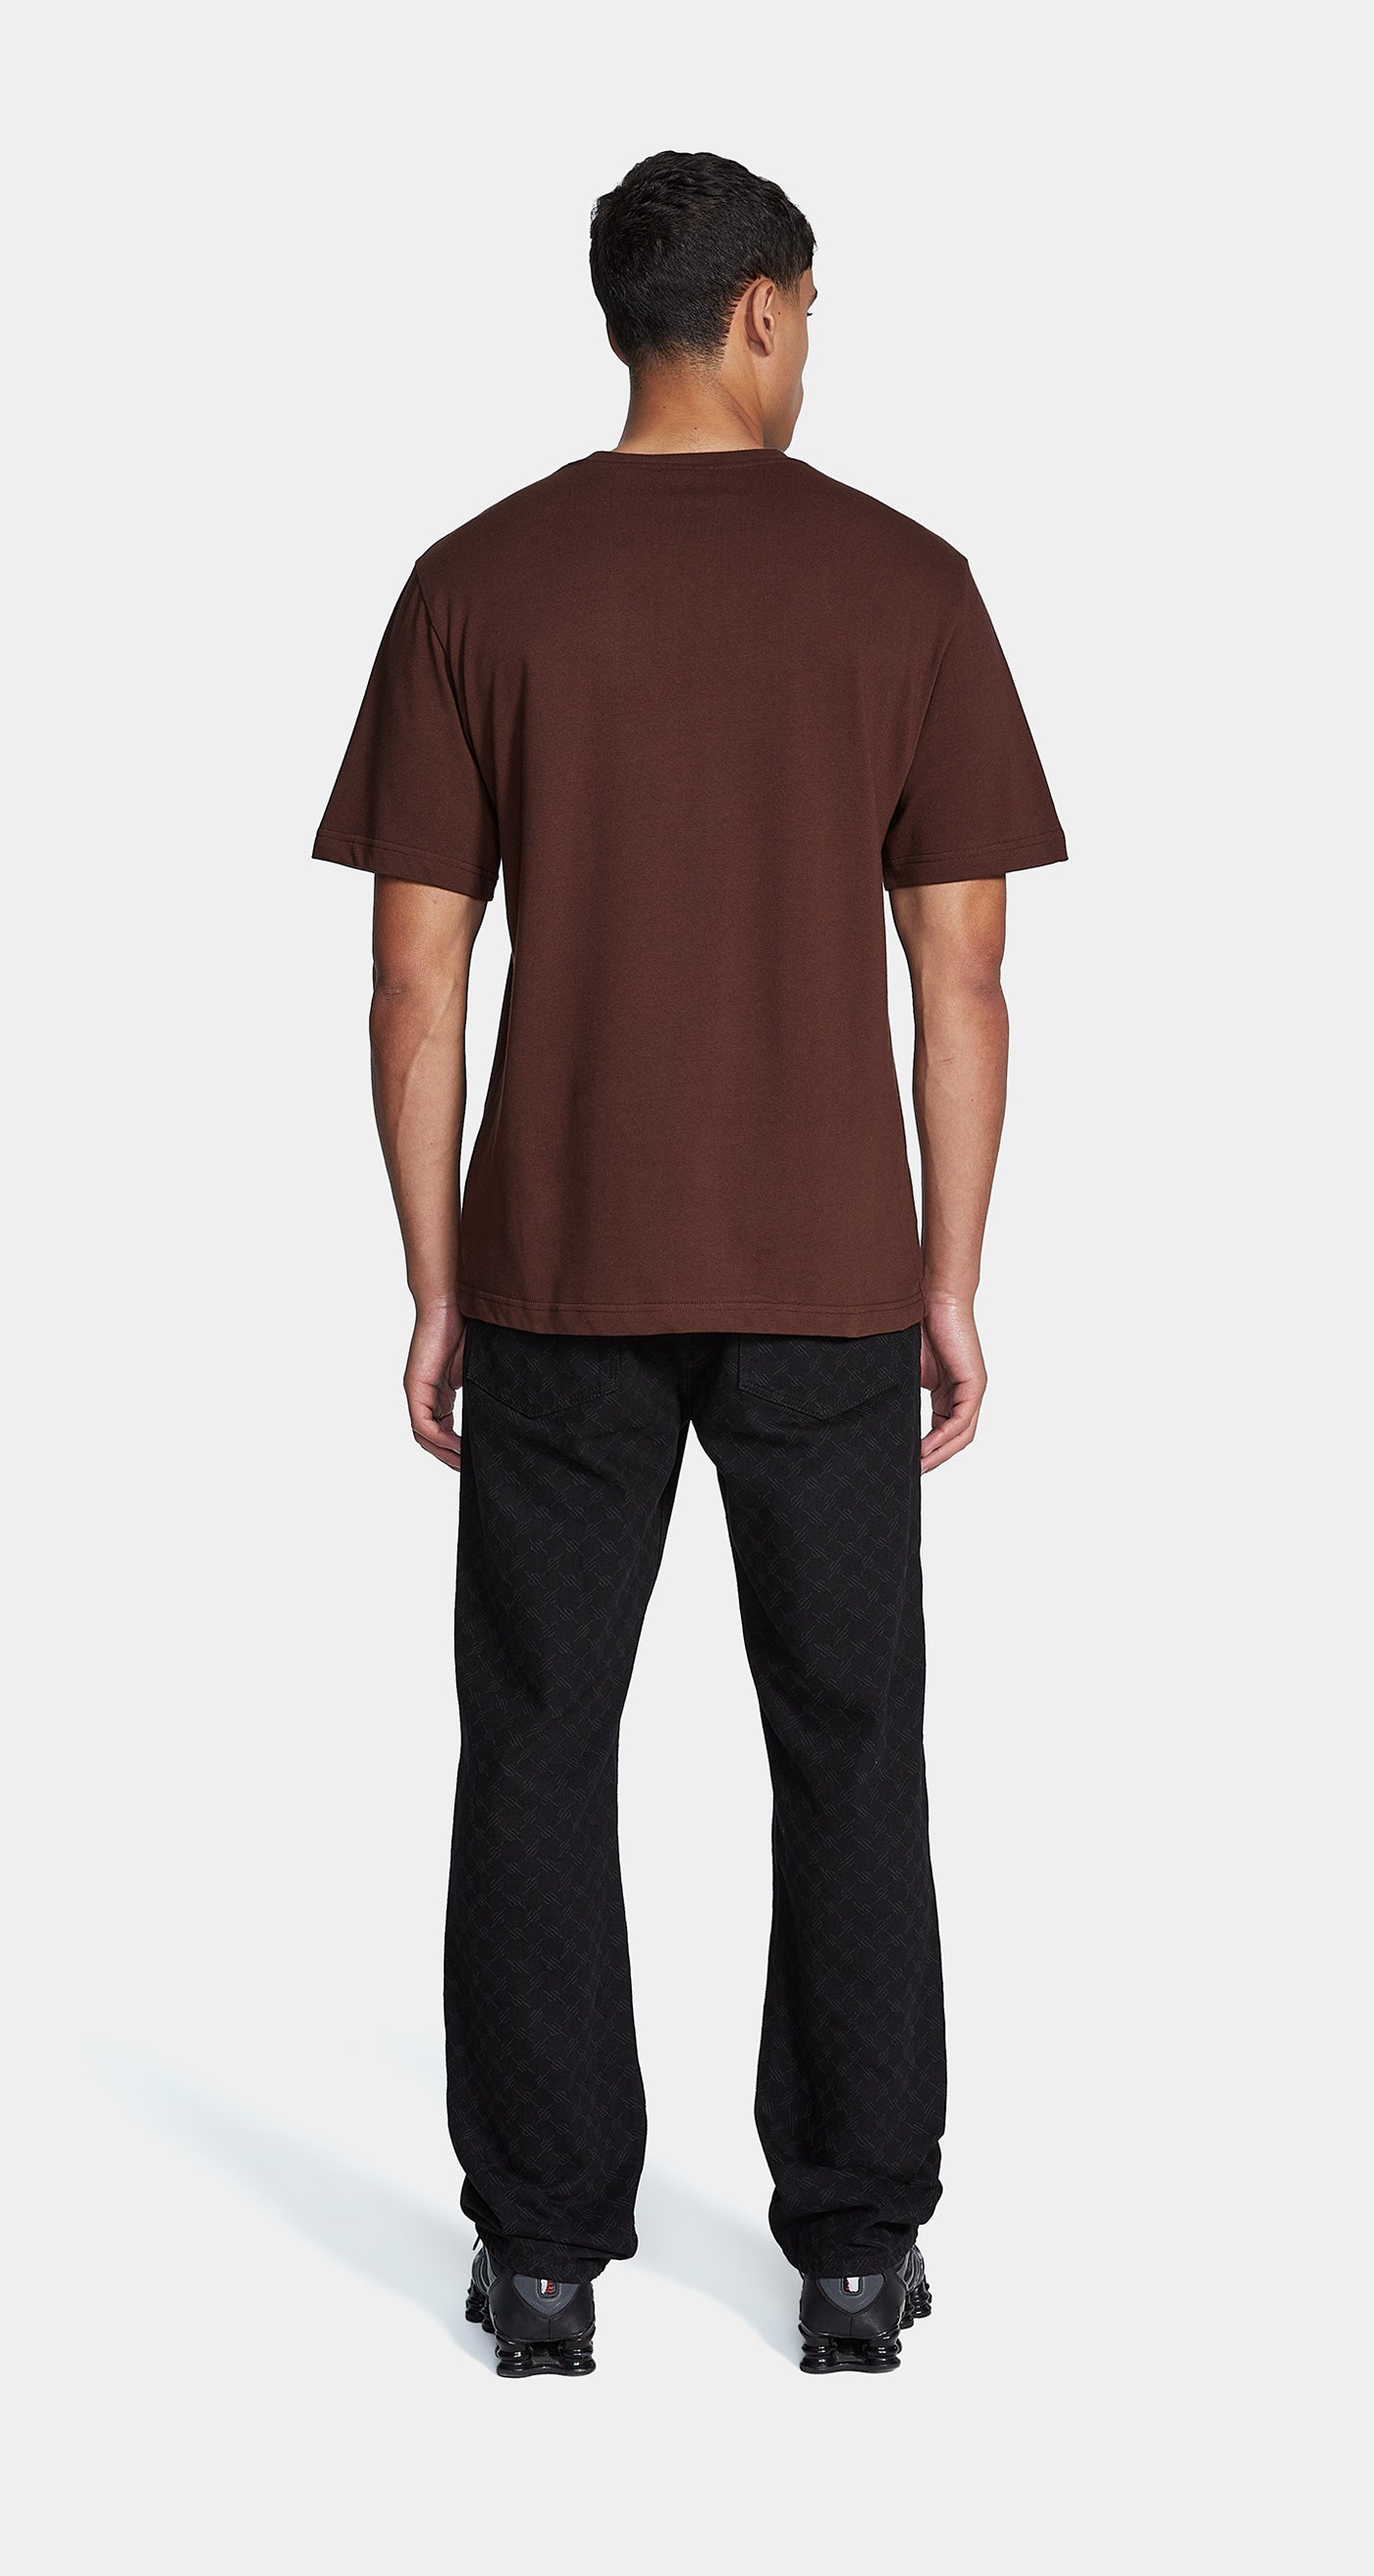 DP - Chocolate Brown Horizo T-Shirt - Men - Rear